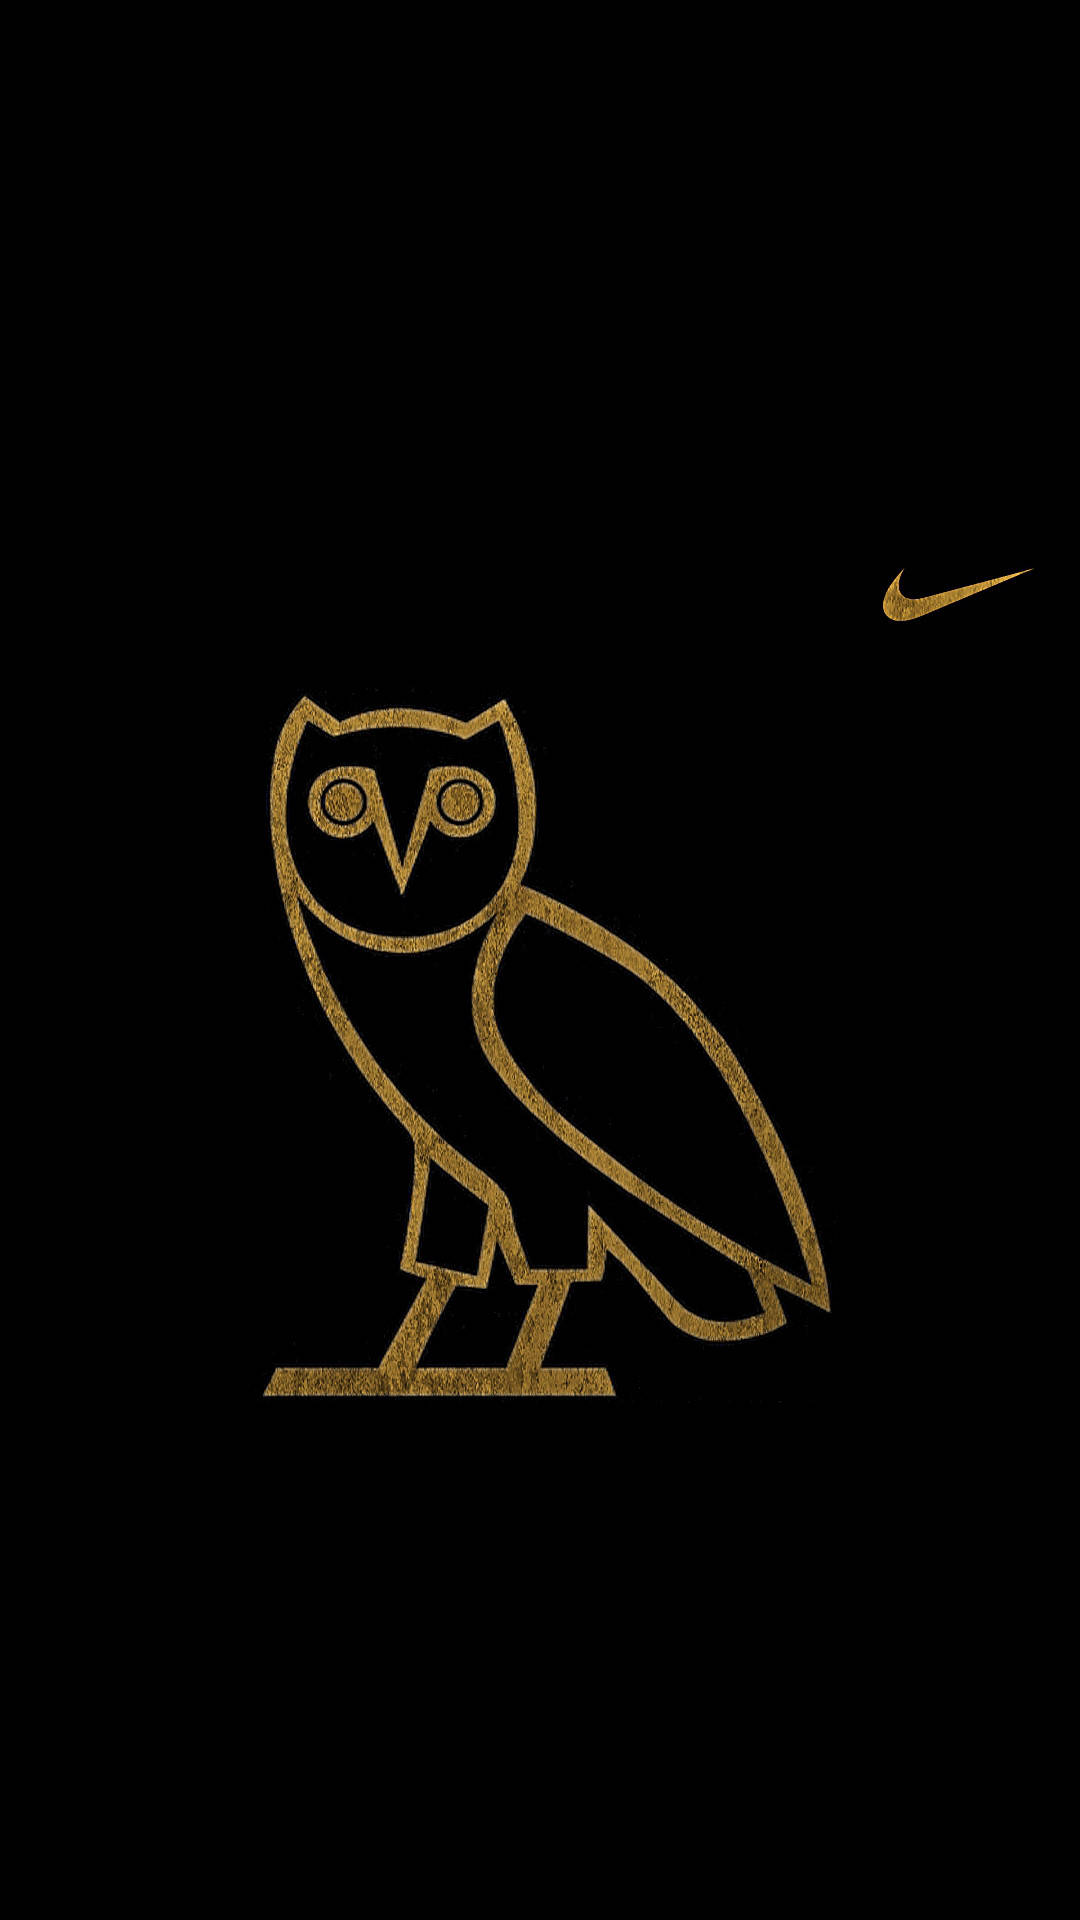 Swoosh Logo With Owl Background